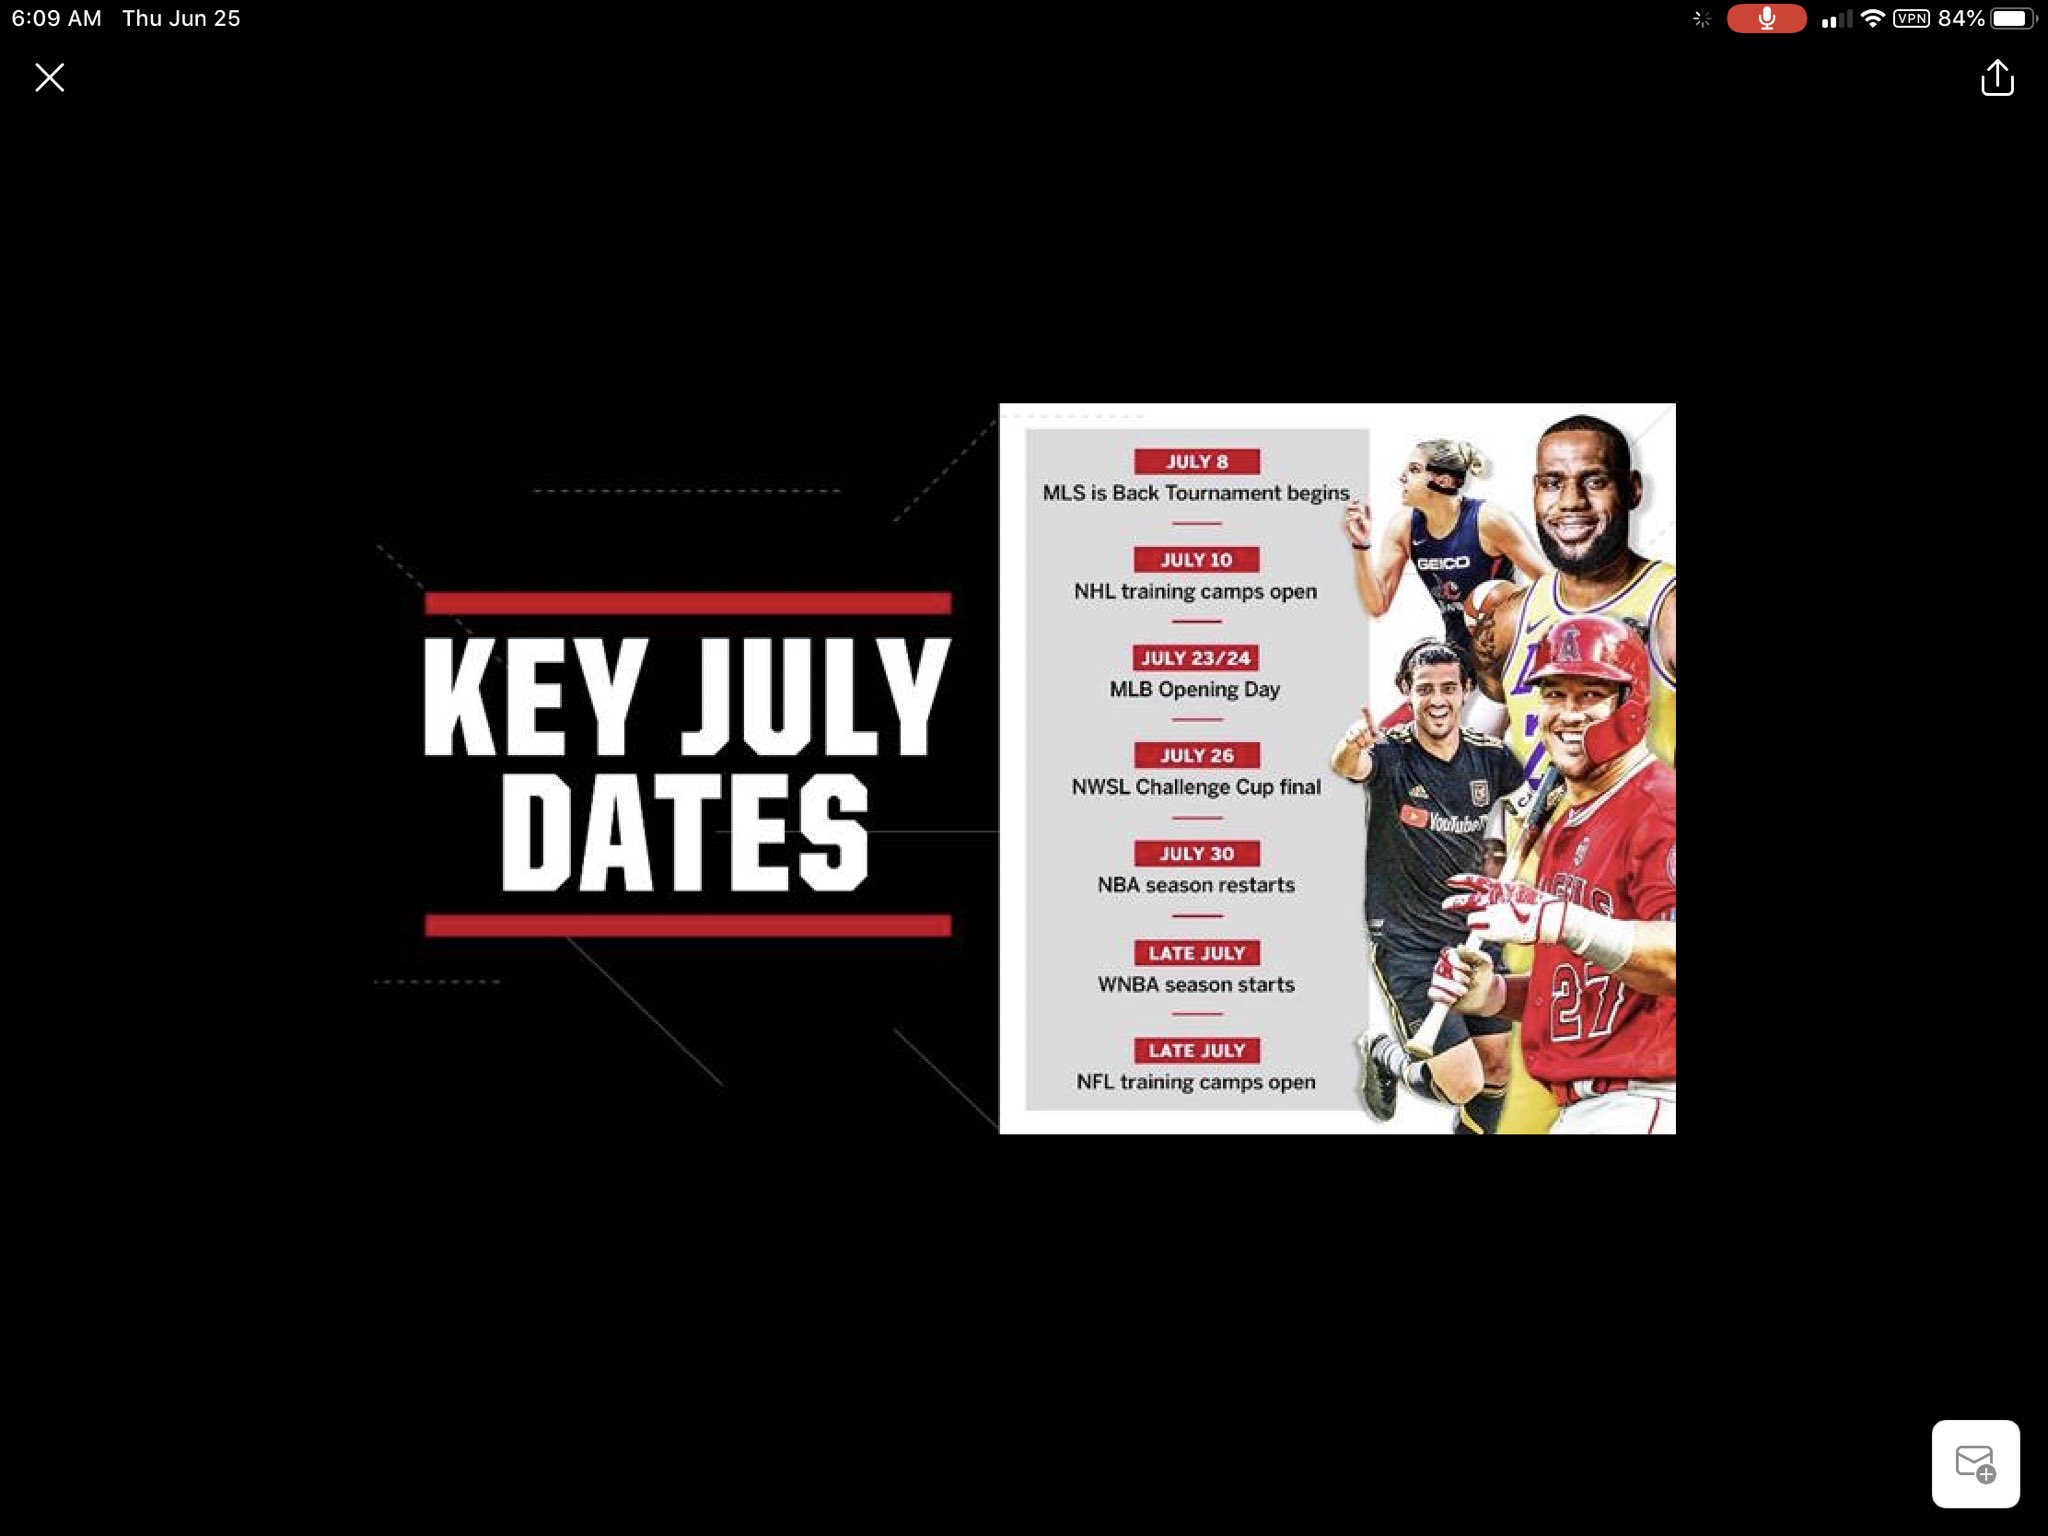 Key July Dates.jpg